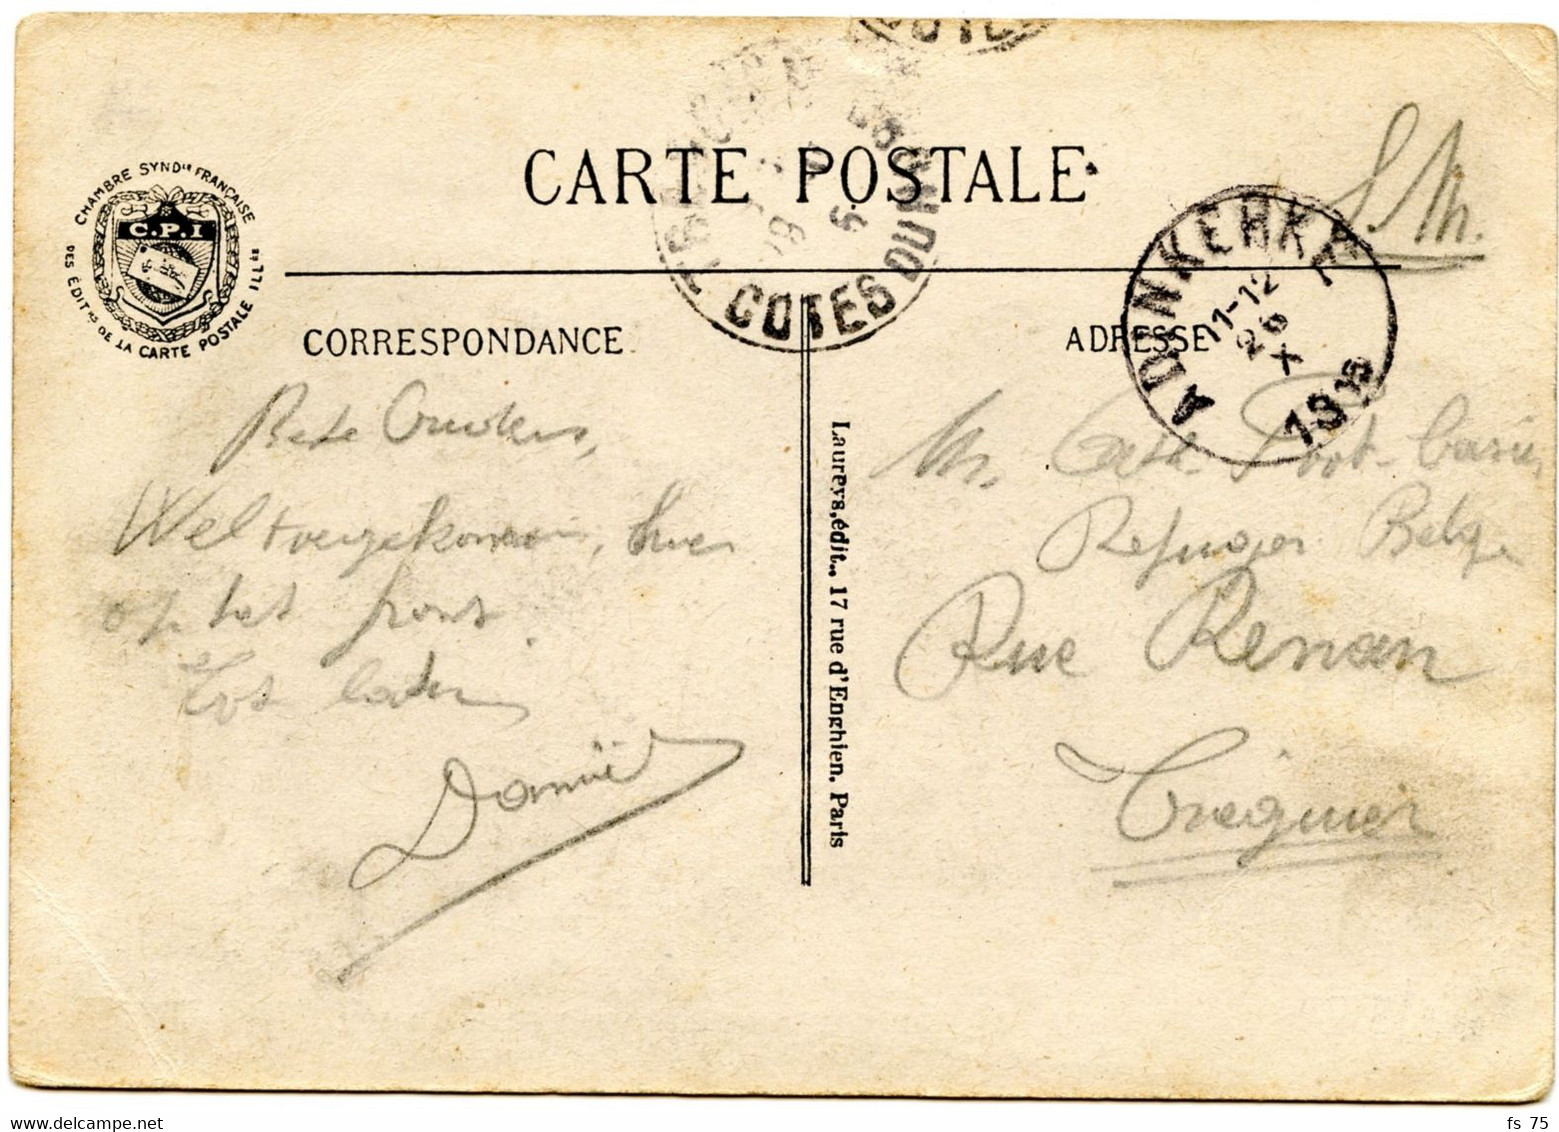 BELGIQUE - SIMPLE CERCLE ADINKERKE SUR CARTE POSTALE EN FRANCHISE, 1915 - Zona No Ocupada